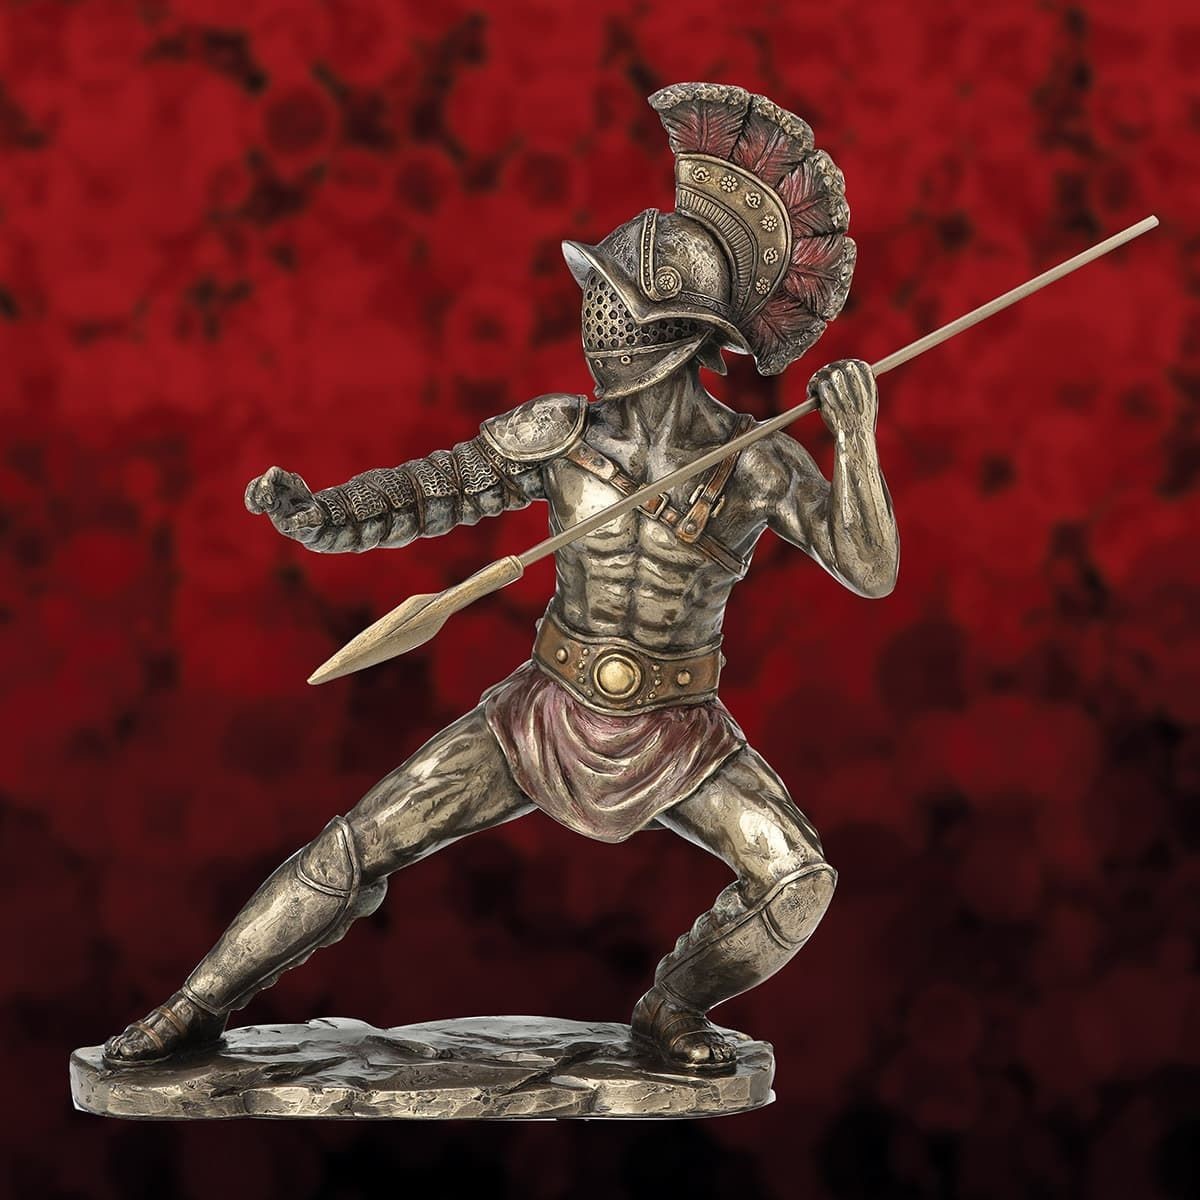 Picture of Murmillo Gladiator weilding Hasta Statue Sculpture Figurine